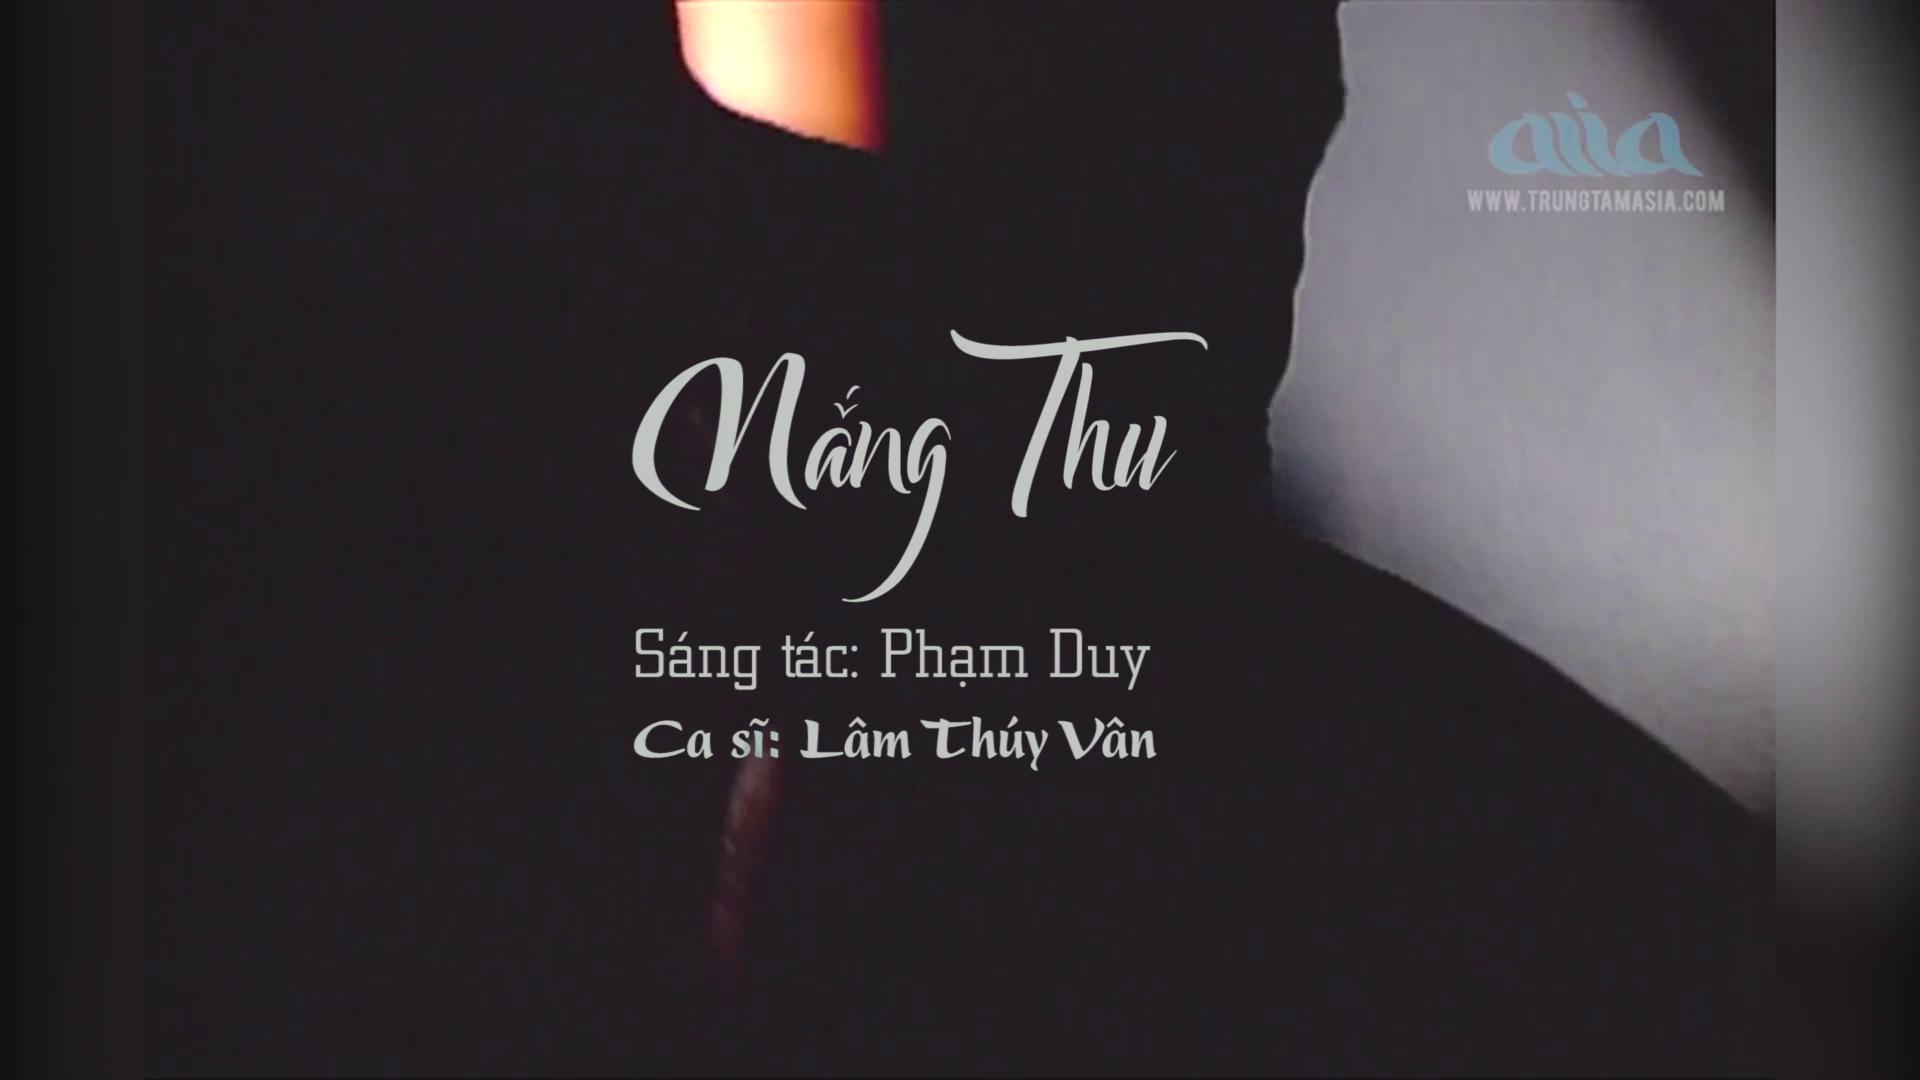 1-[1080]-Nang Thu - Lam Thuy Van [flac].mkv.jpeg